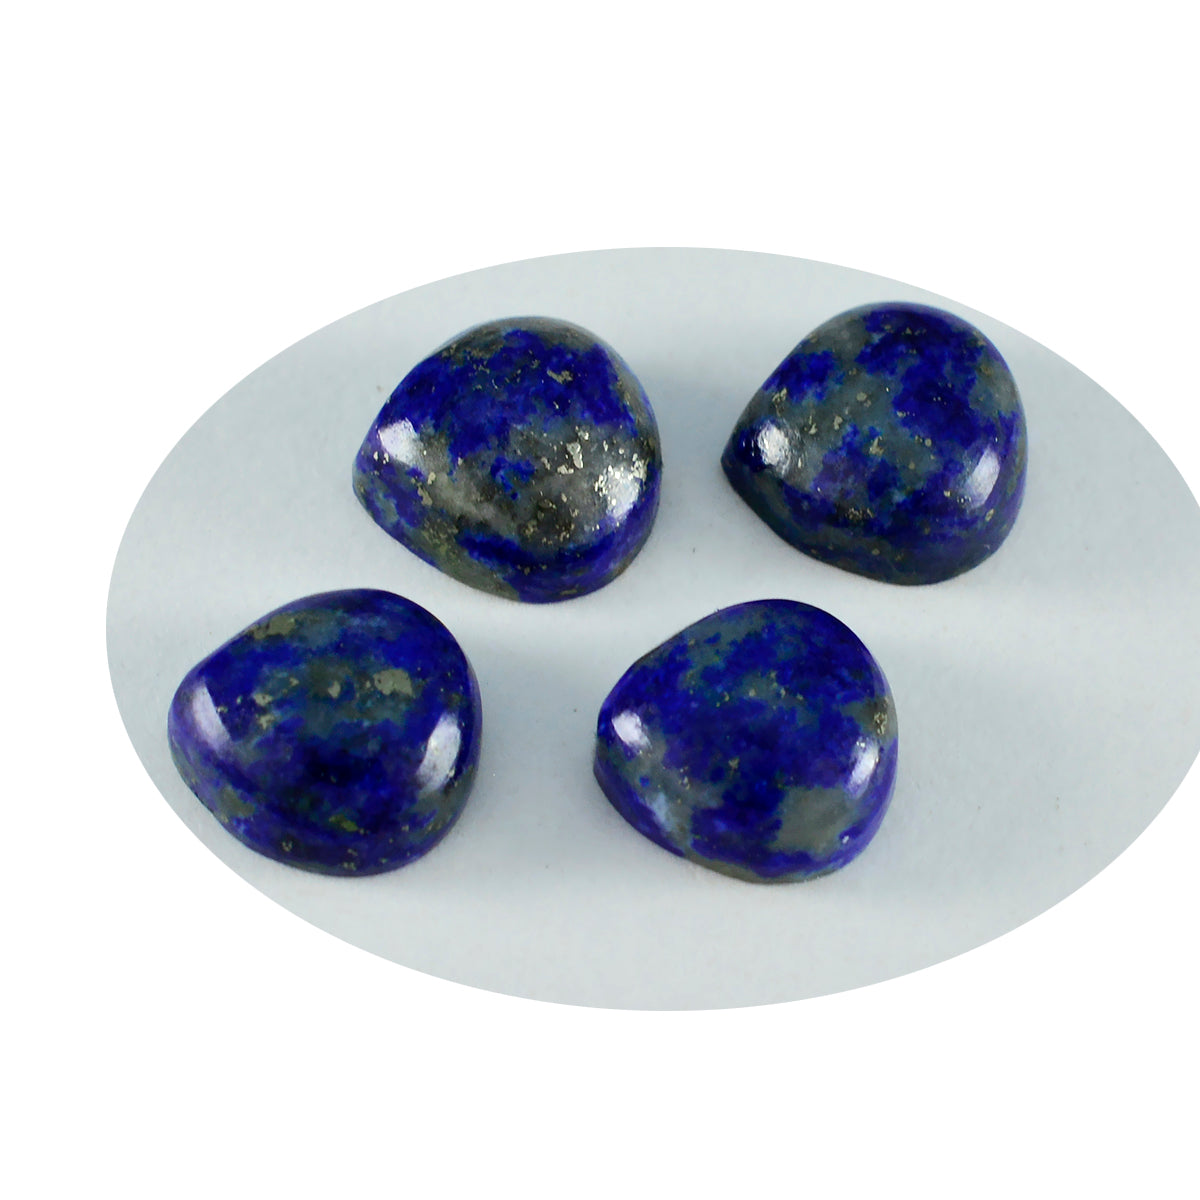 Riyogems 1PC Blue Lapis Lazuli Cabochon 8x8 mm Heart Shape A+1 Quality Loose Gemstone